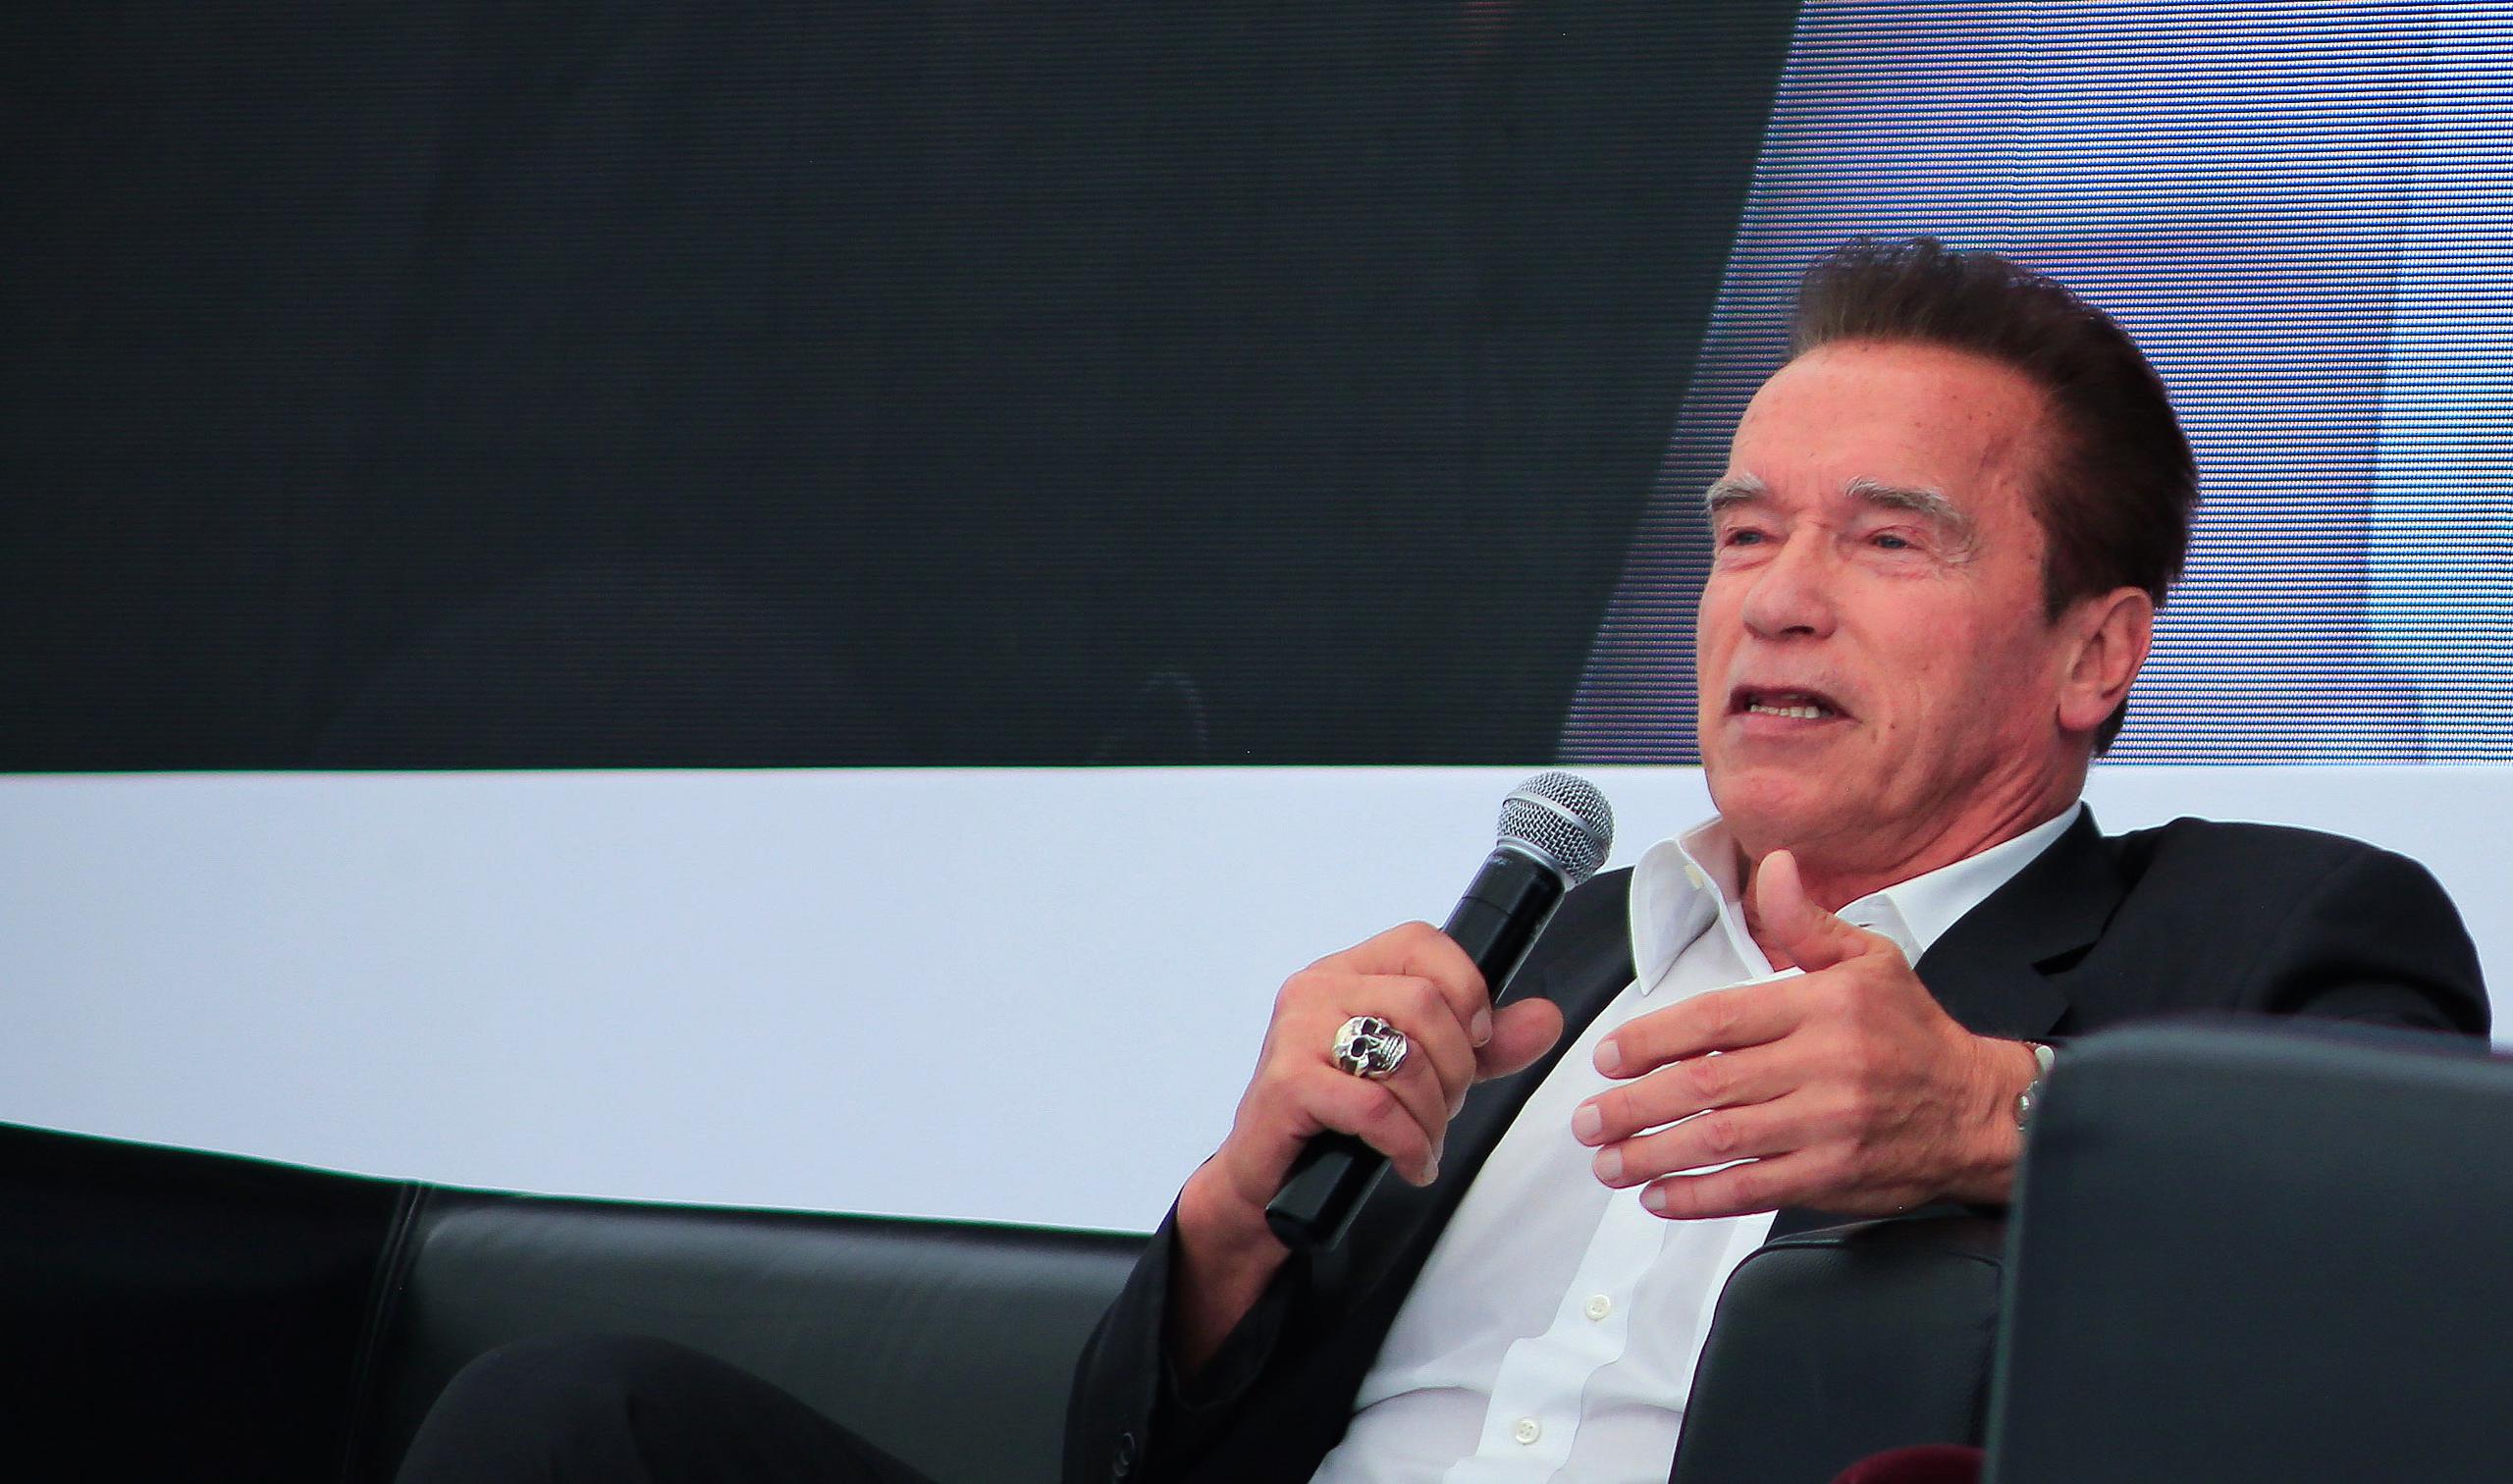 El actor Arnold Schwarzenegger